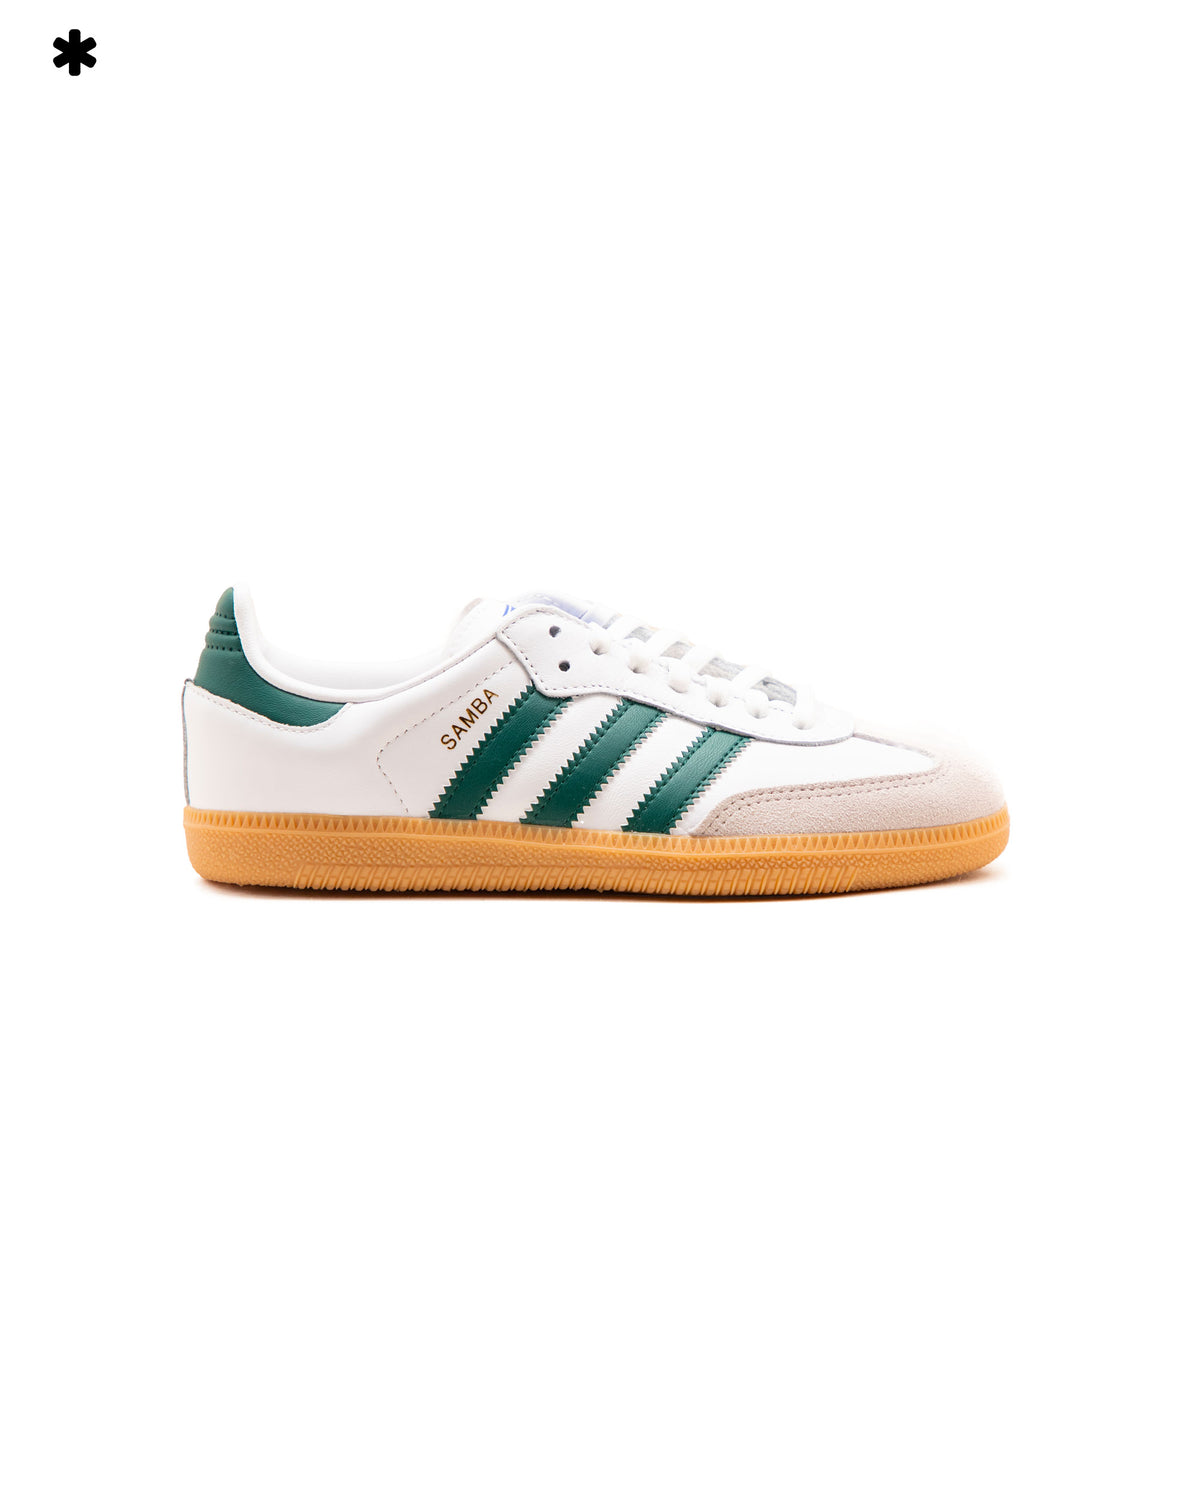 Adidas Samba OG C White Green